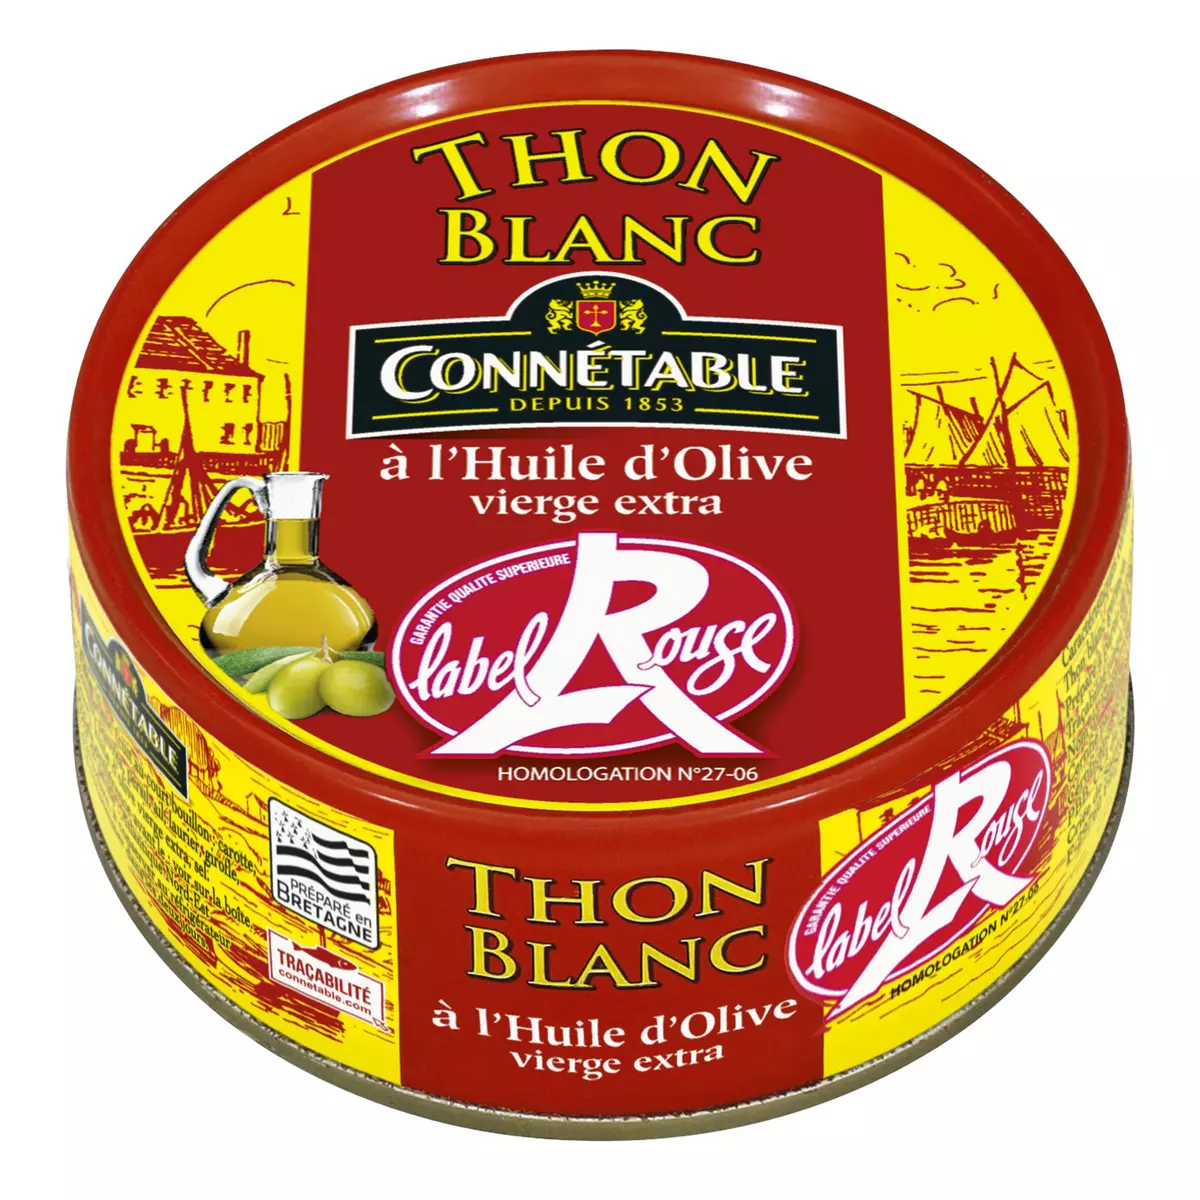 CONNETABLE Thon blanc à l'huile d'olive vierge extra label Rouge 160g